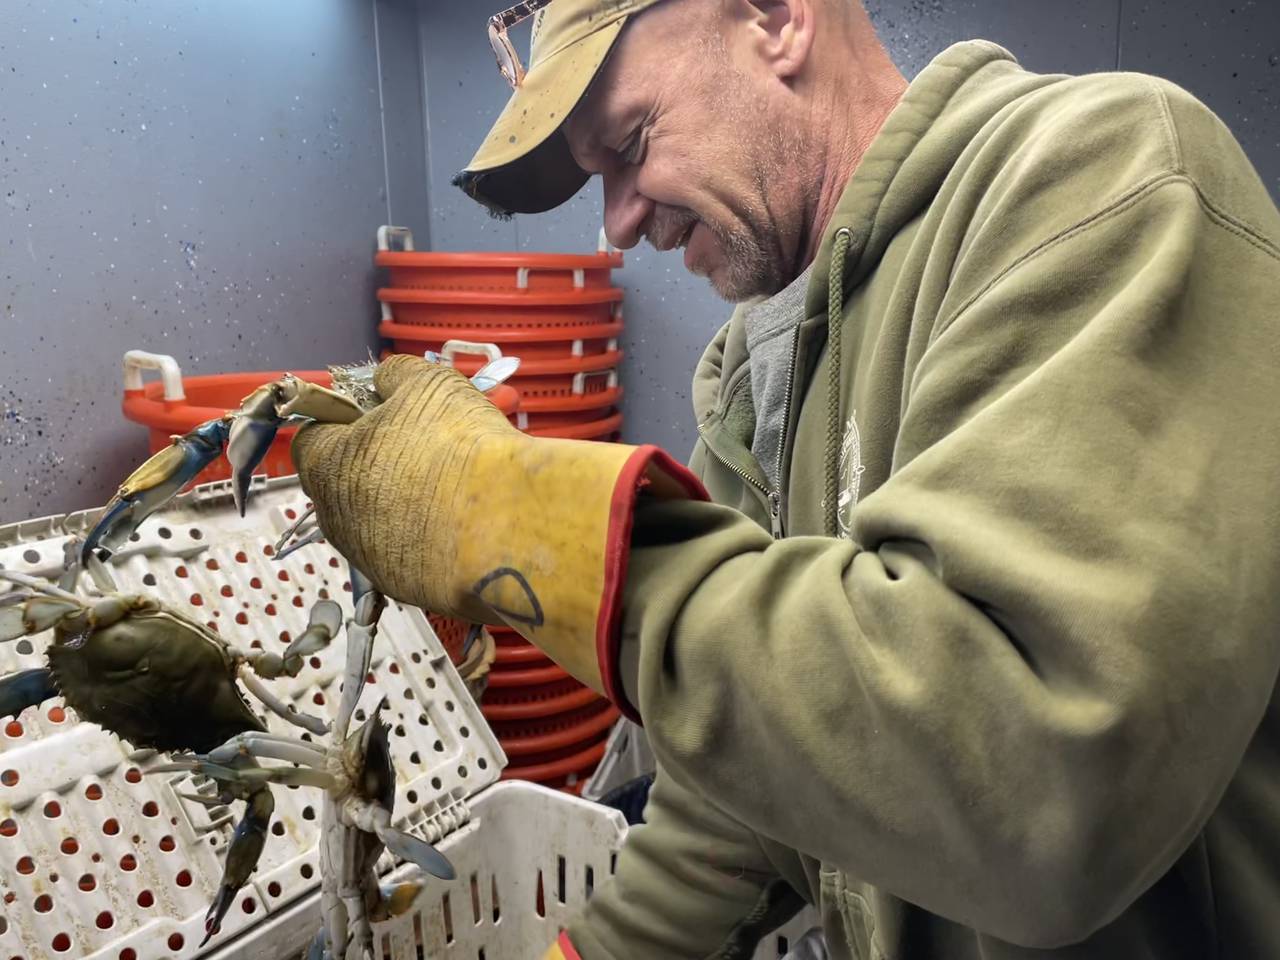 Former waterman Sam Werner handles crabs at his seafood shop in Curtis Bay.